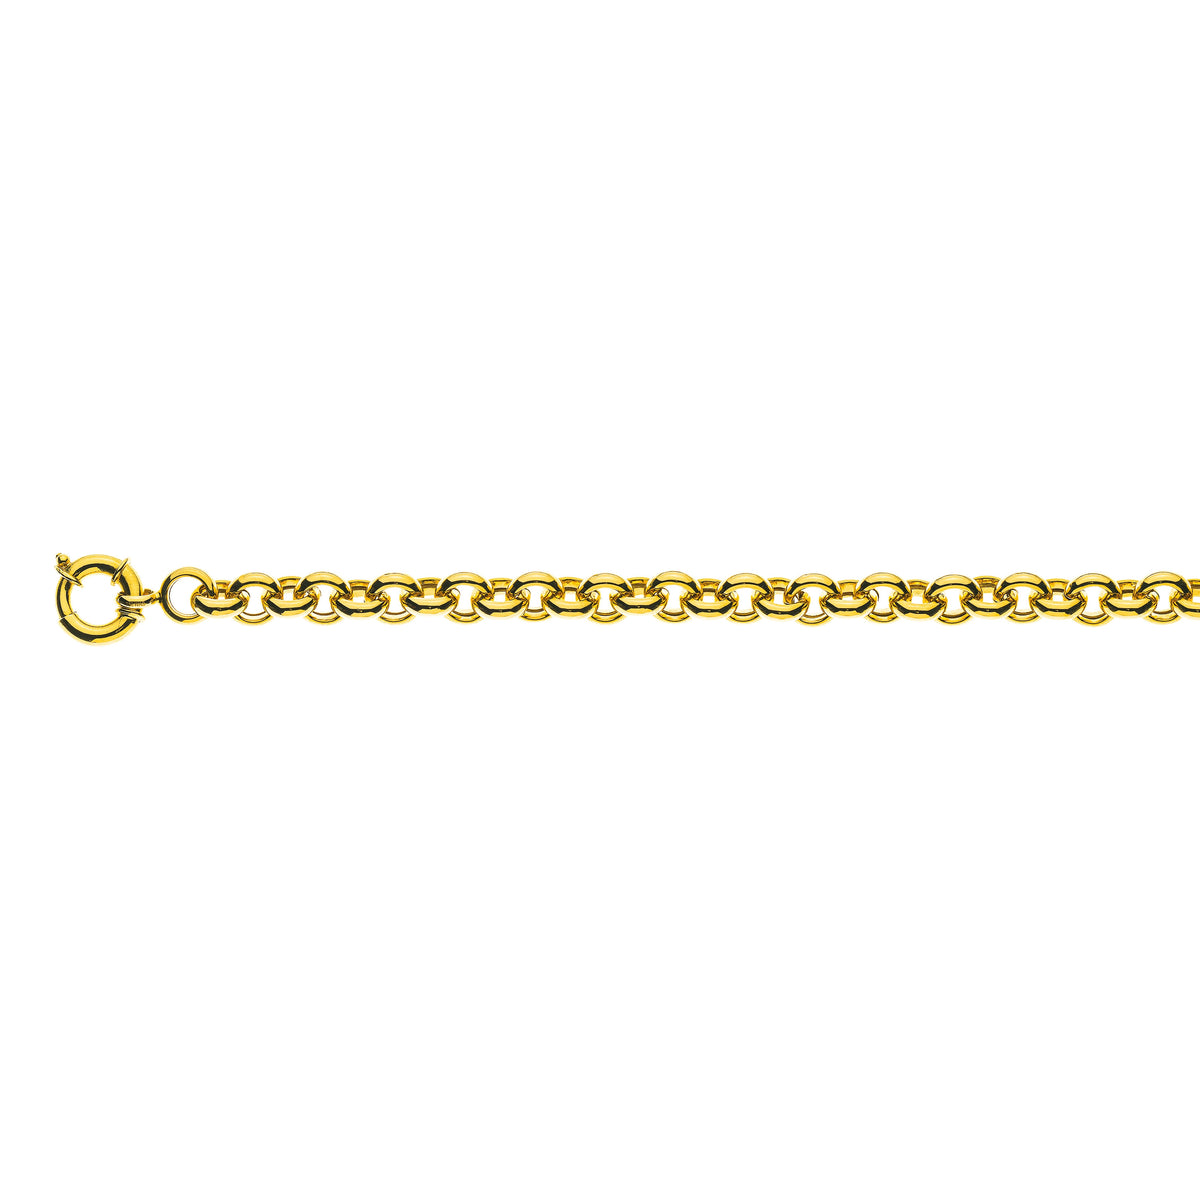 Halbmassives Erbs-Armband aus 750er Gelbgold, ca. 9.0mm dick, mit Federring-Verschluss